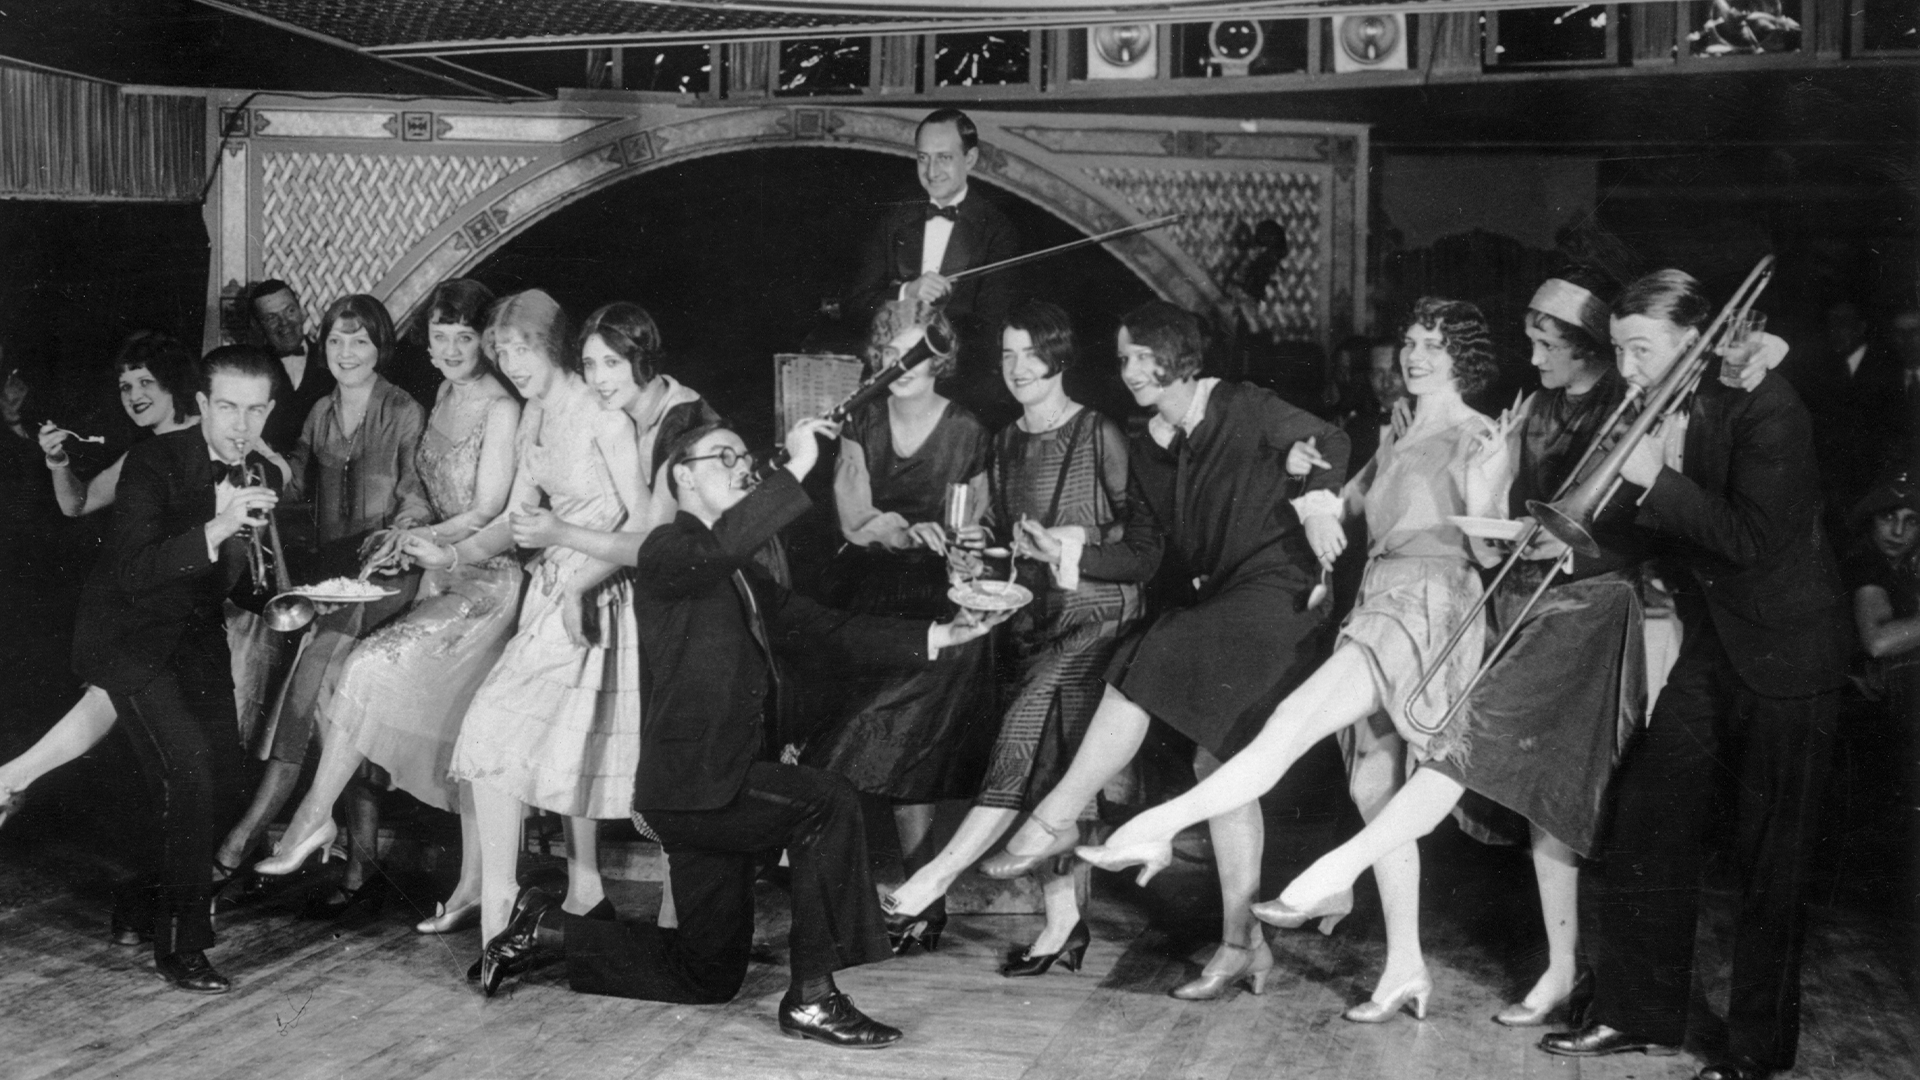 History of the Roaring Twenties: Flapper Style